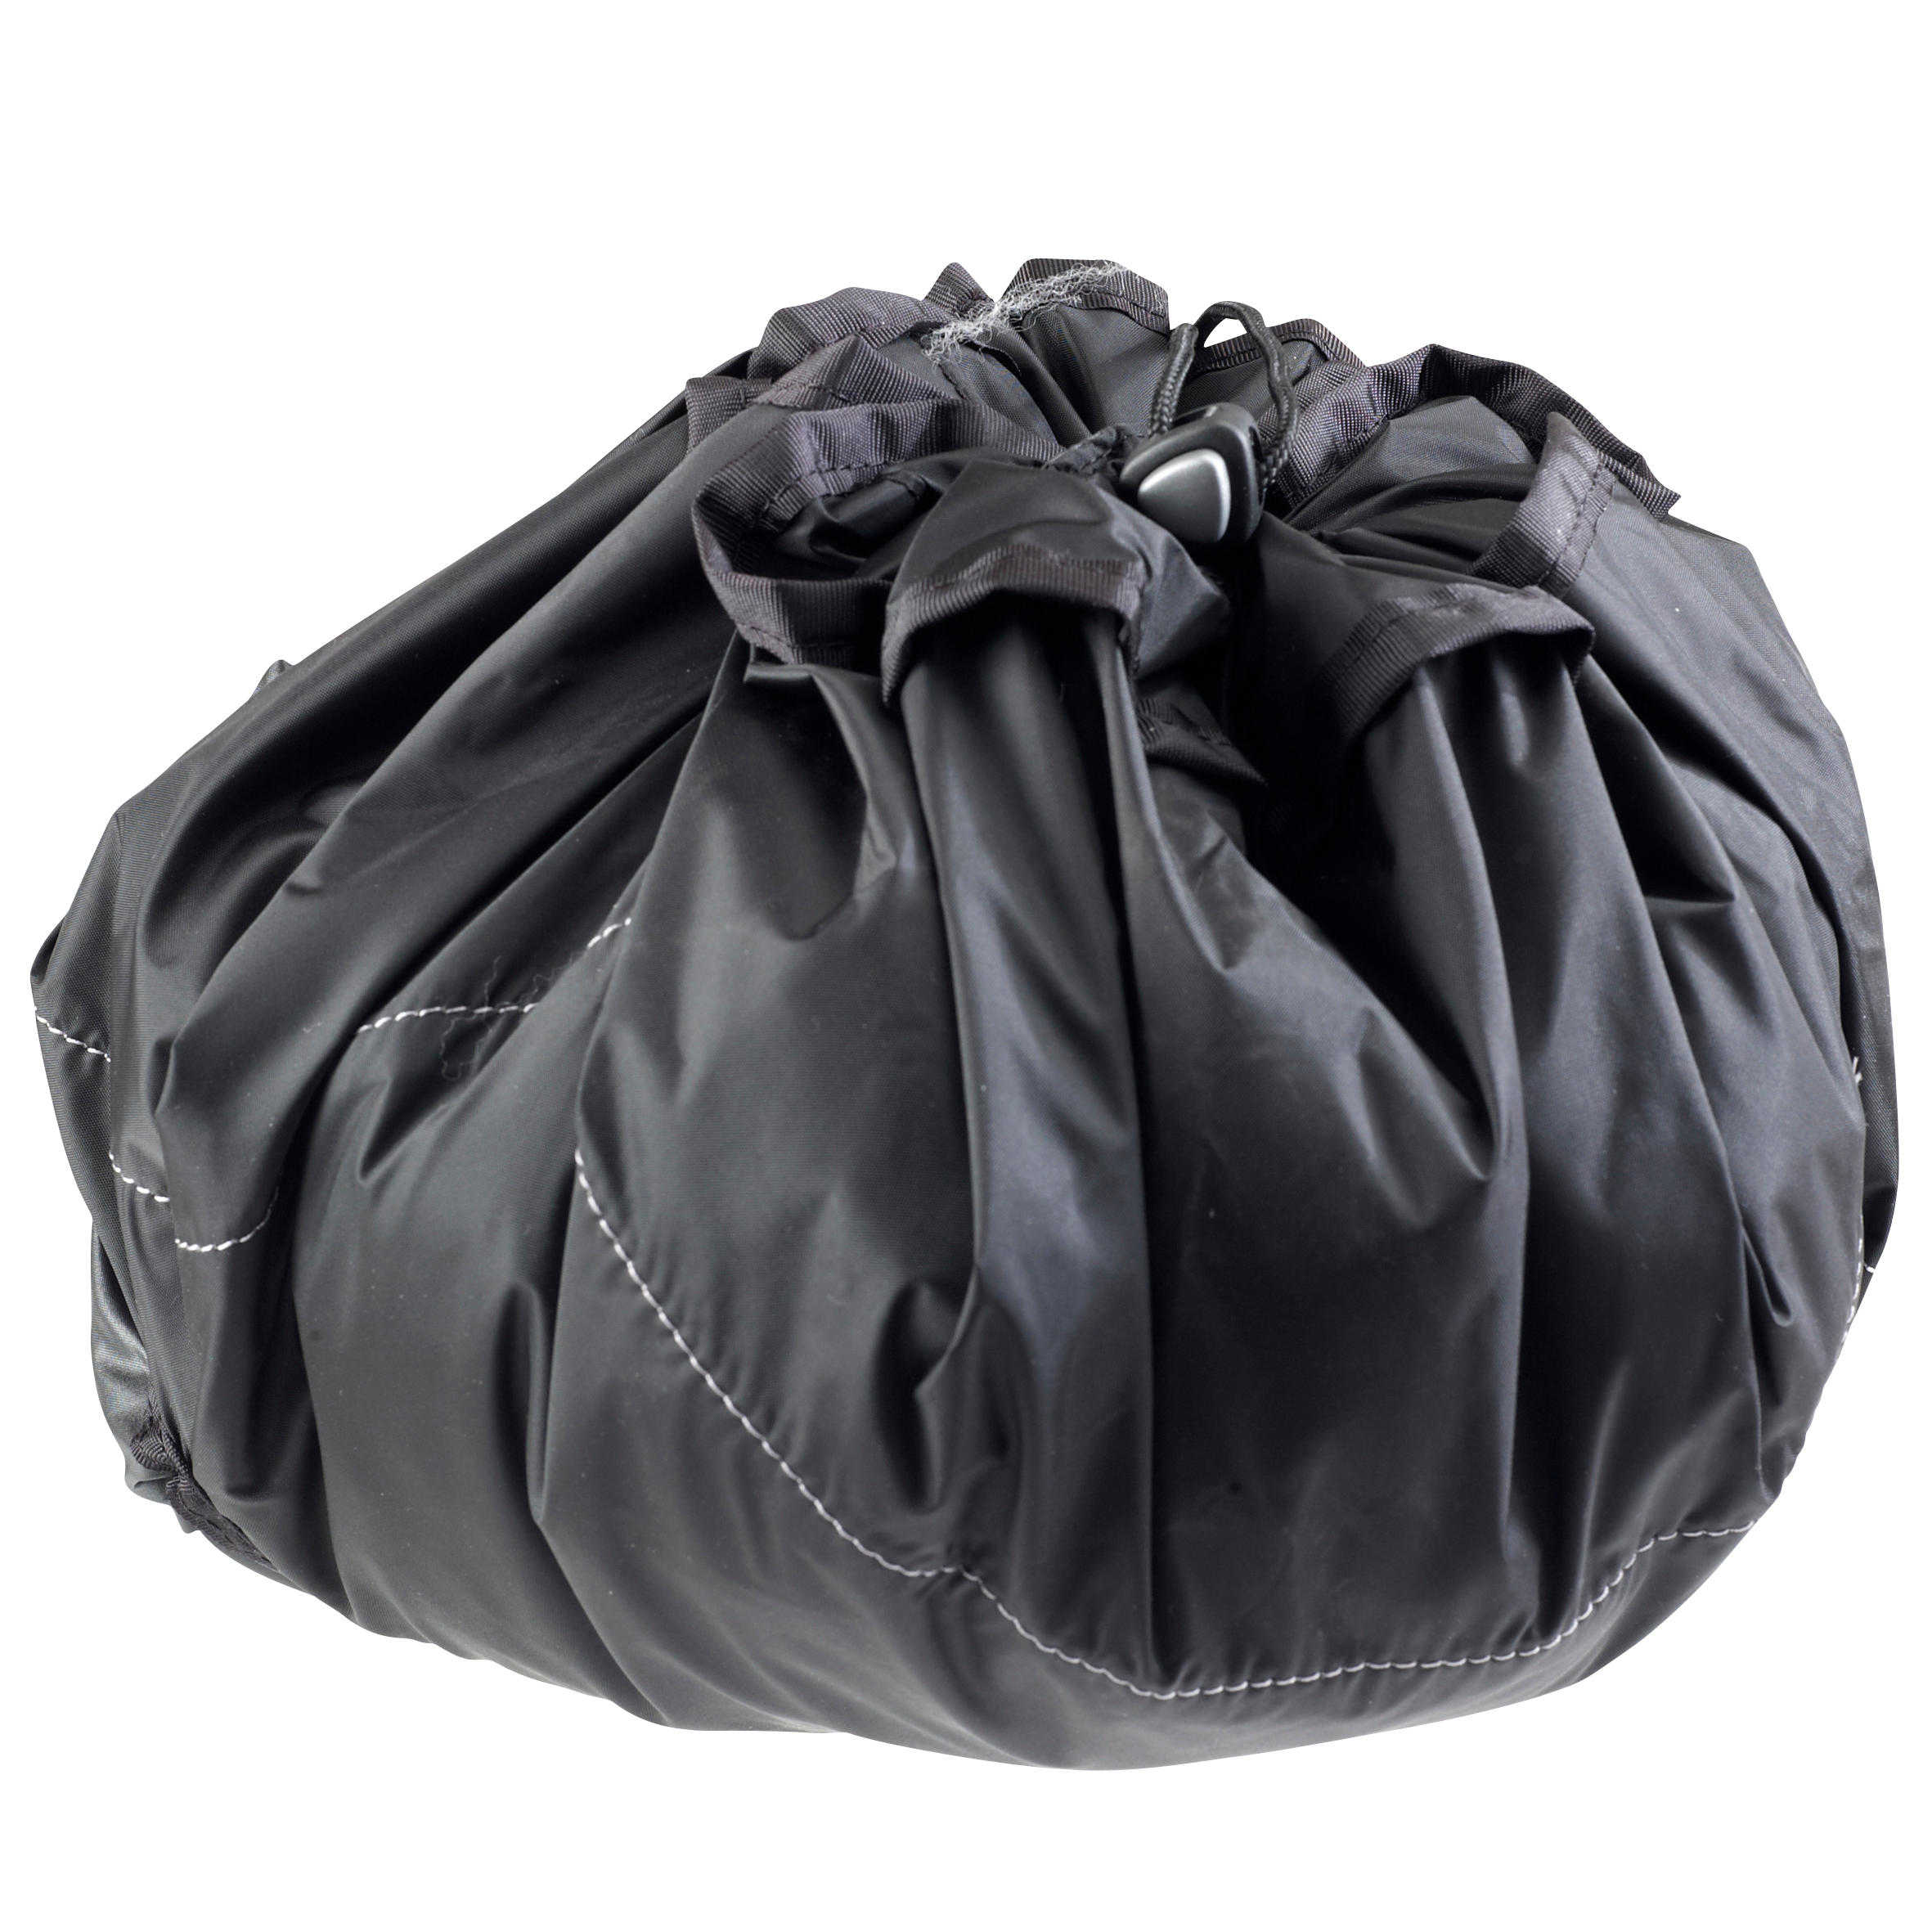 PTWO Fitness Bag - Black - DOMYOS